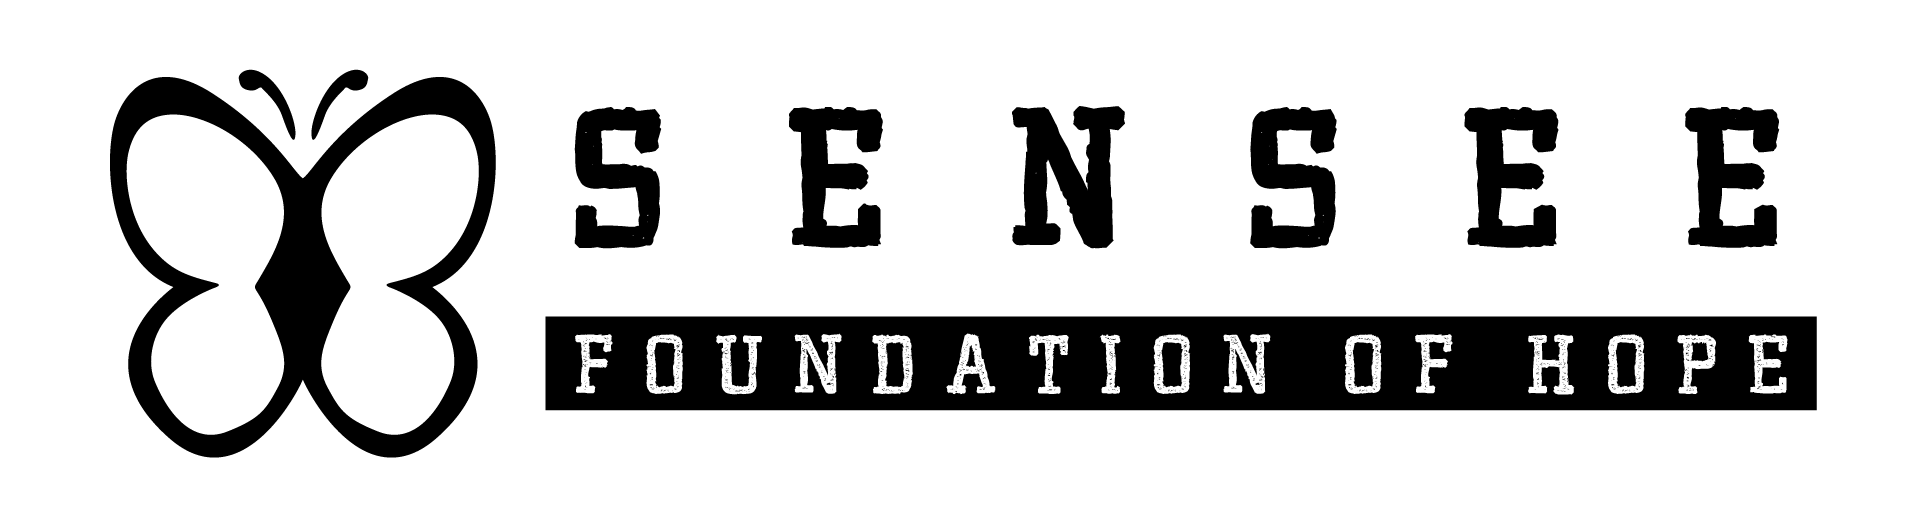 Sensee Foundation of Hope, Inc. logo